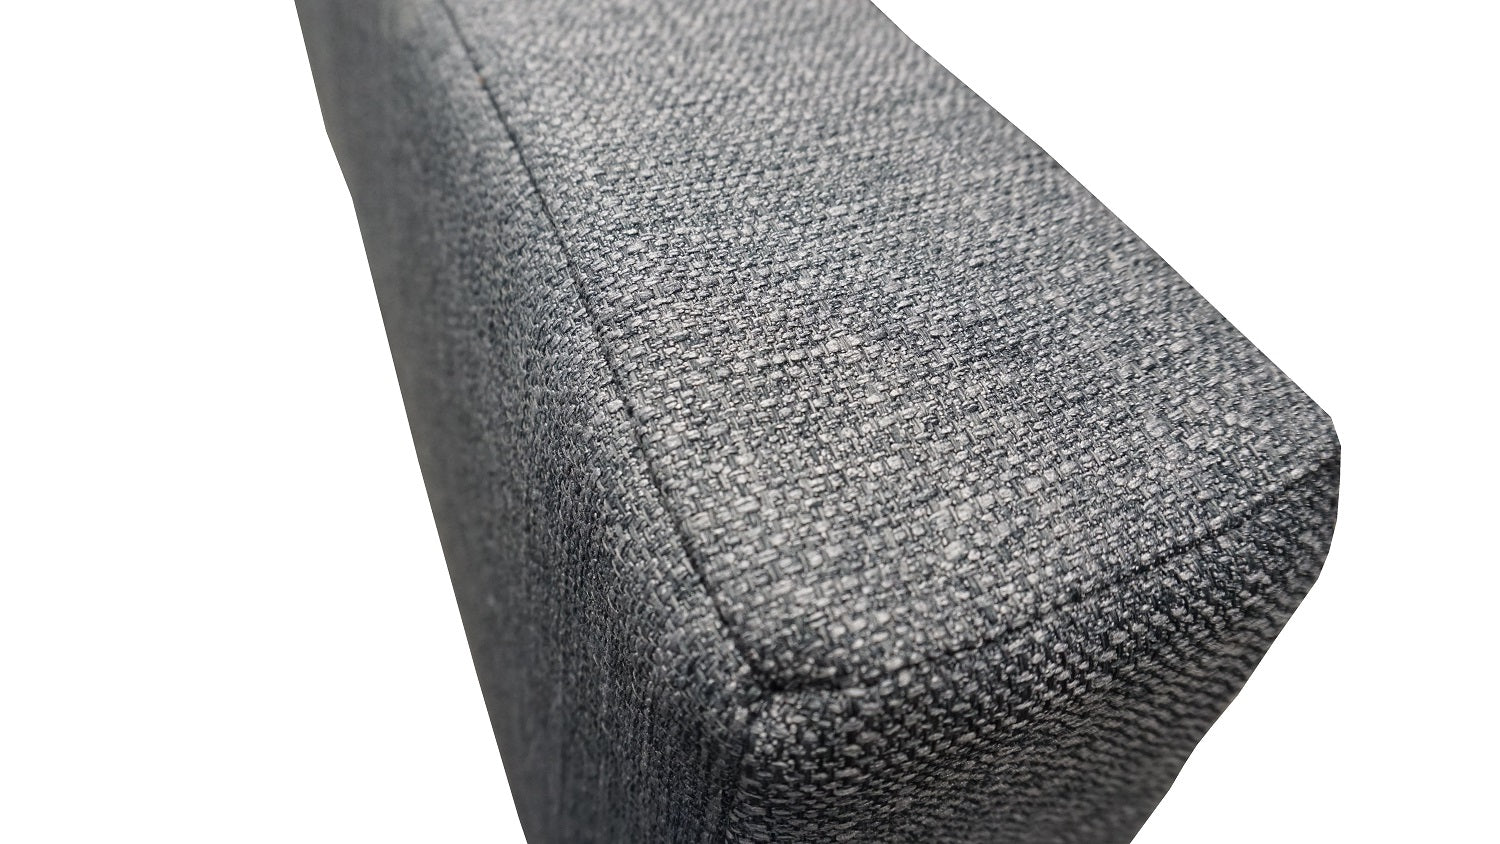 Adjustable Support Cushion,cotton Linen Headrest Backrest Triangle